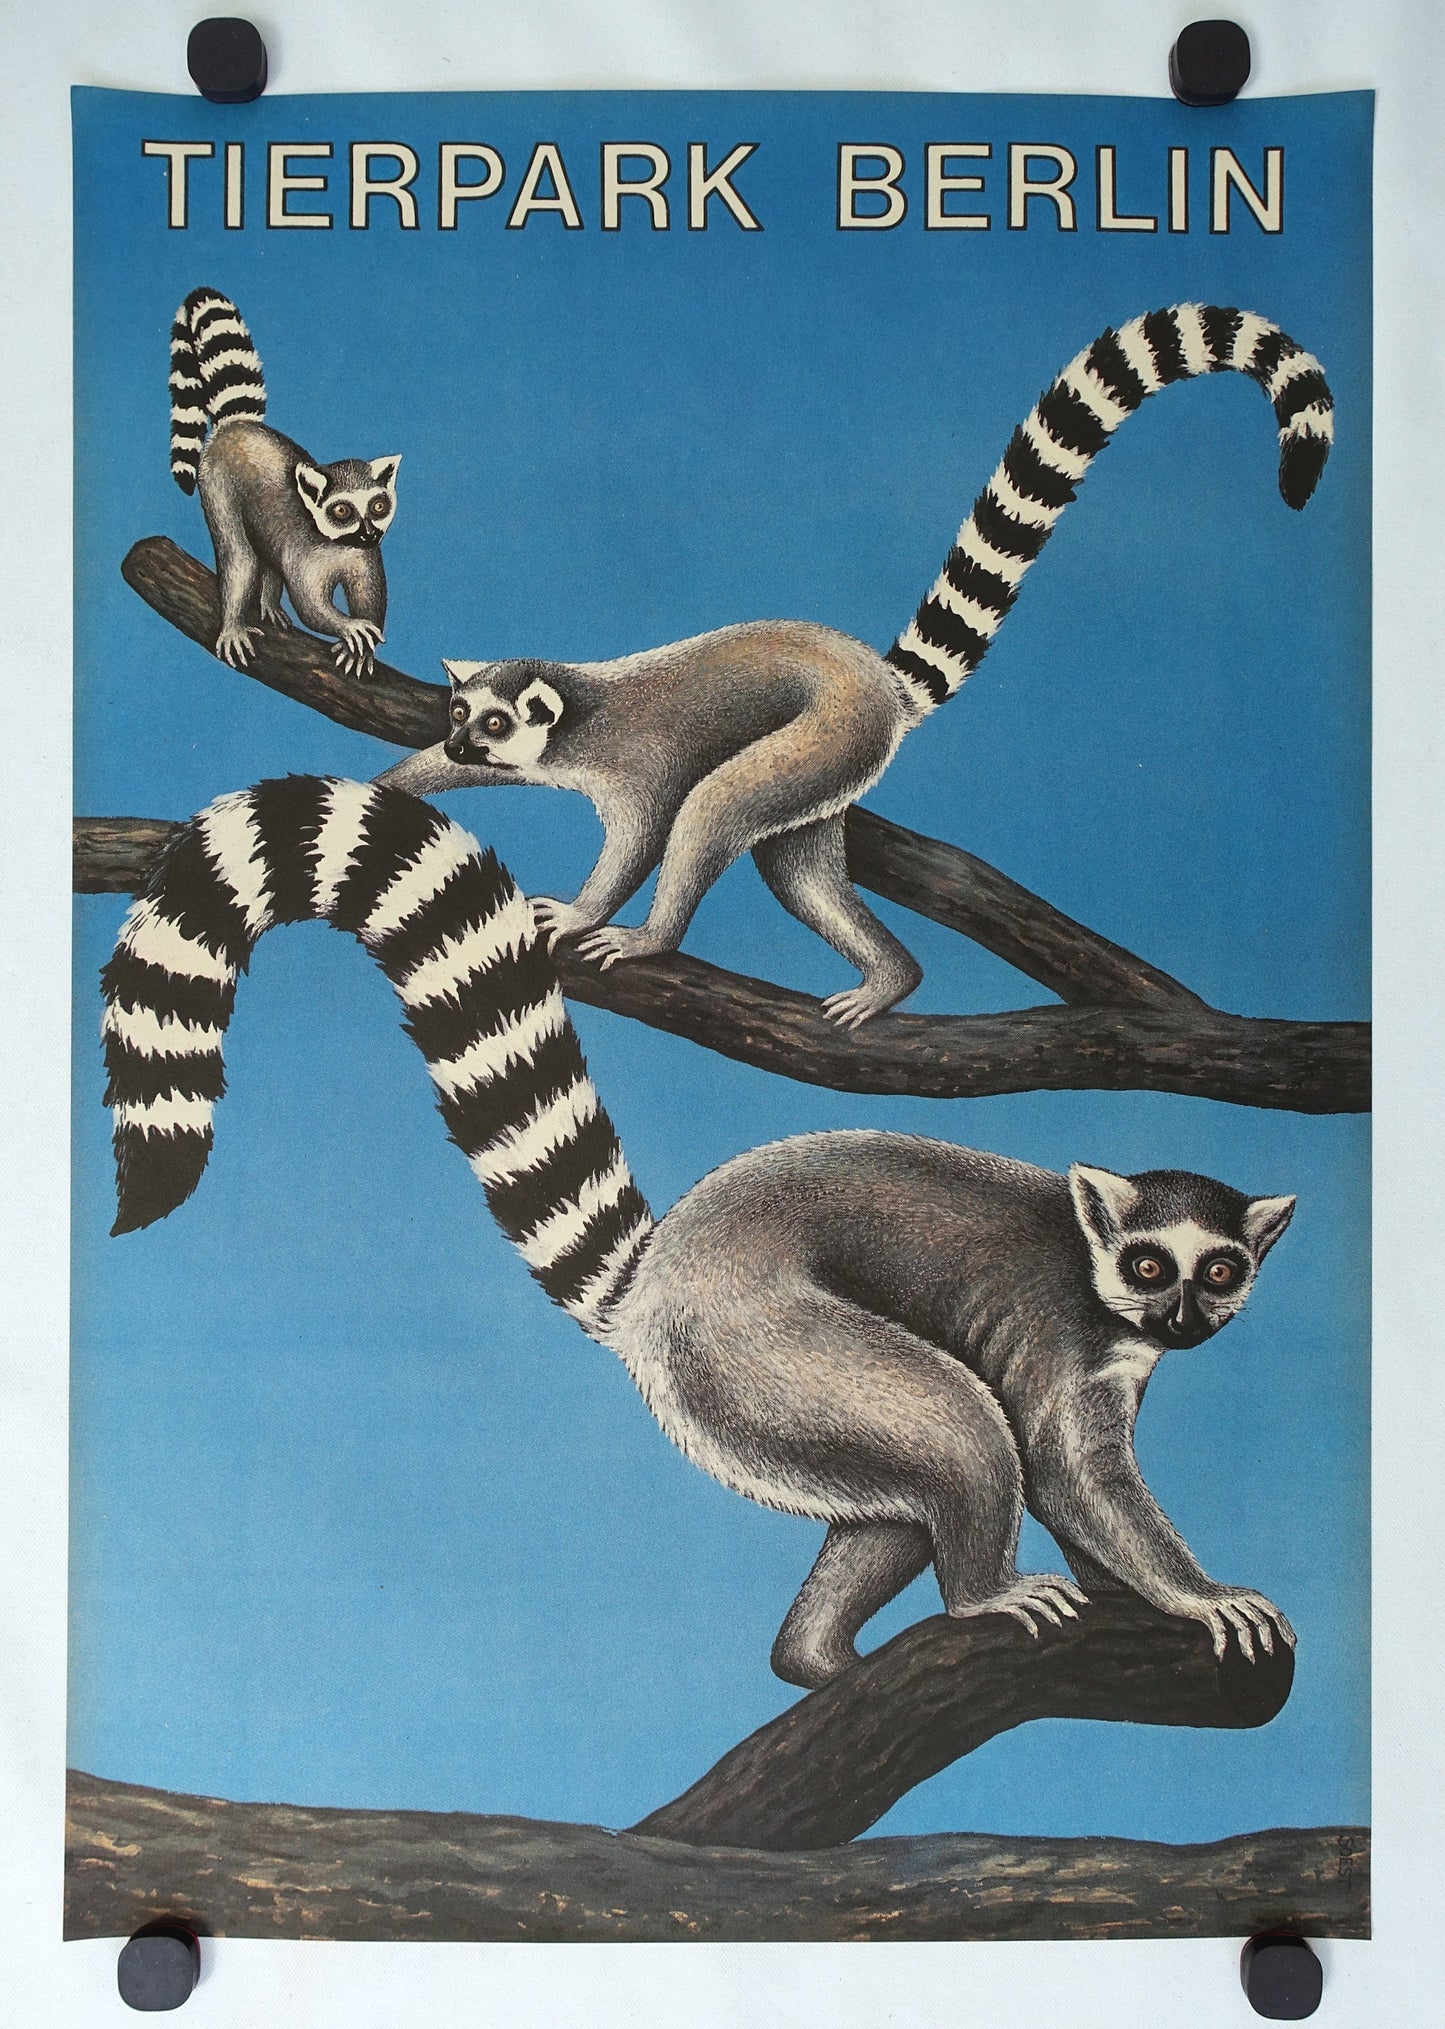 1986 Tierpark Berlin (Lemurs) - Original Vintage Poster